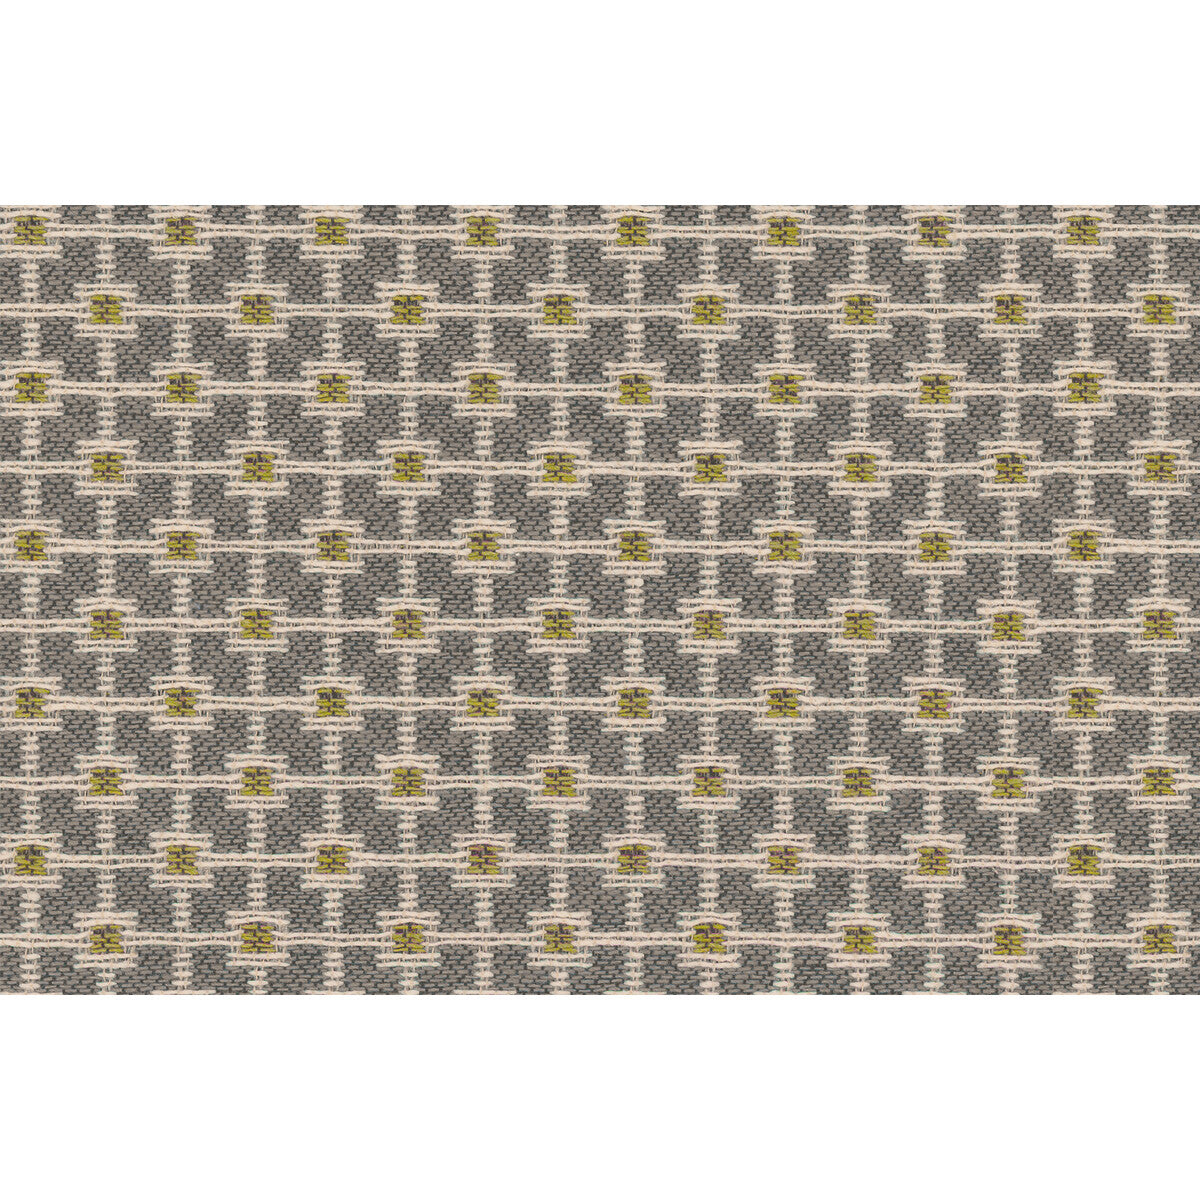 Kravet Smart fabric in 34311-411 color - pattern 34311.411.0 - by Kravet Smart